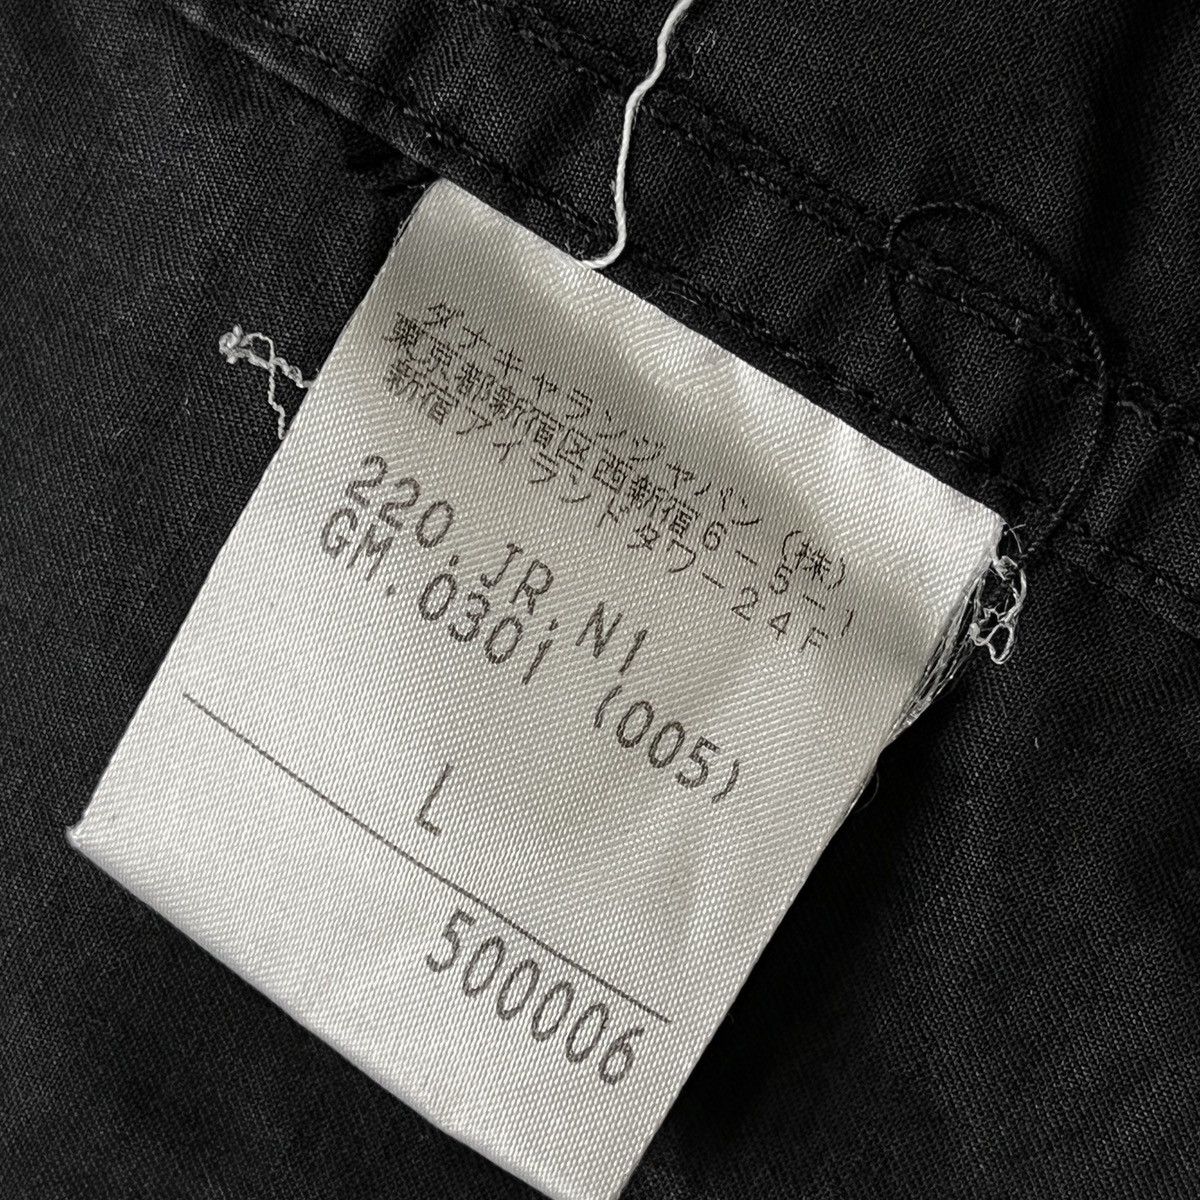 Vintage - DKNY Buttons Up Pocket Shirts Italian Designer - 12